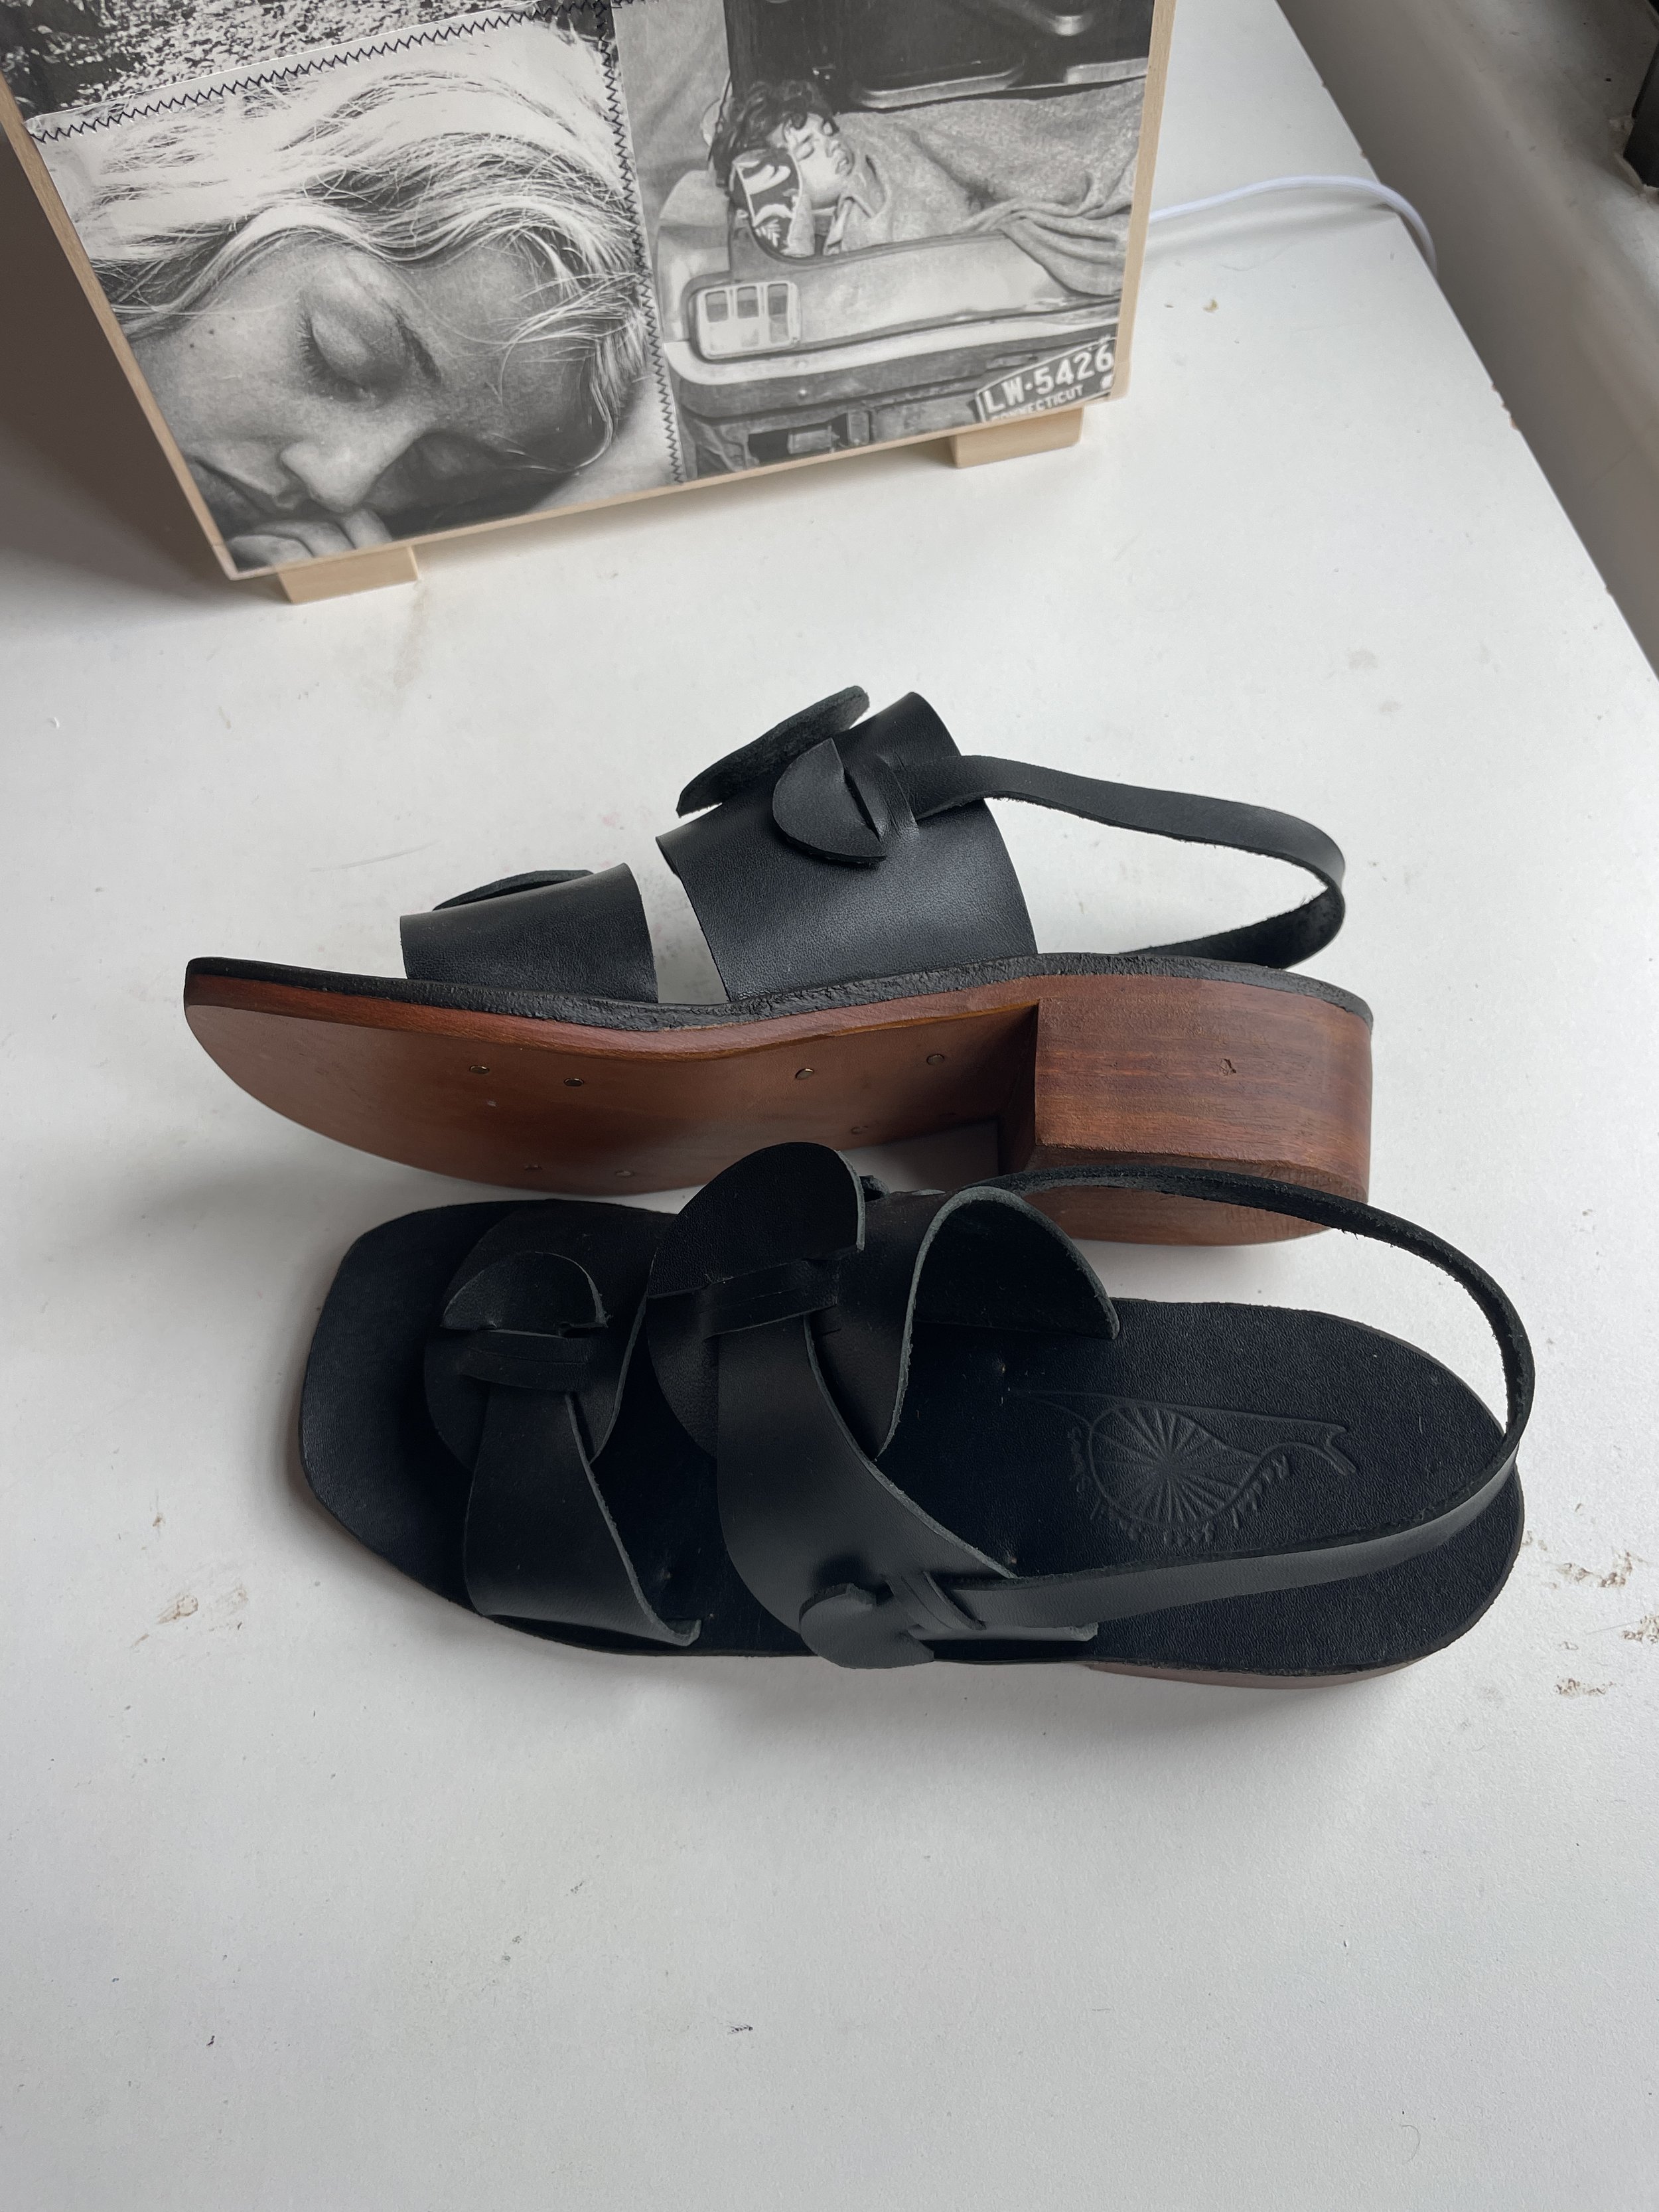 Men's Handmade Leather Sandals